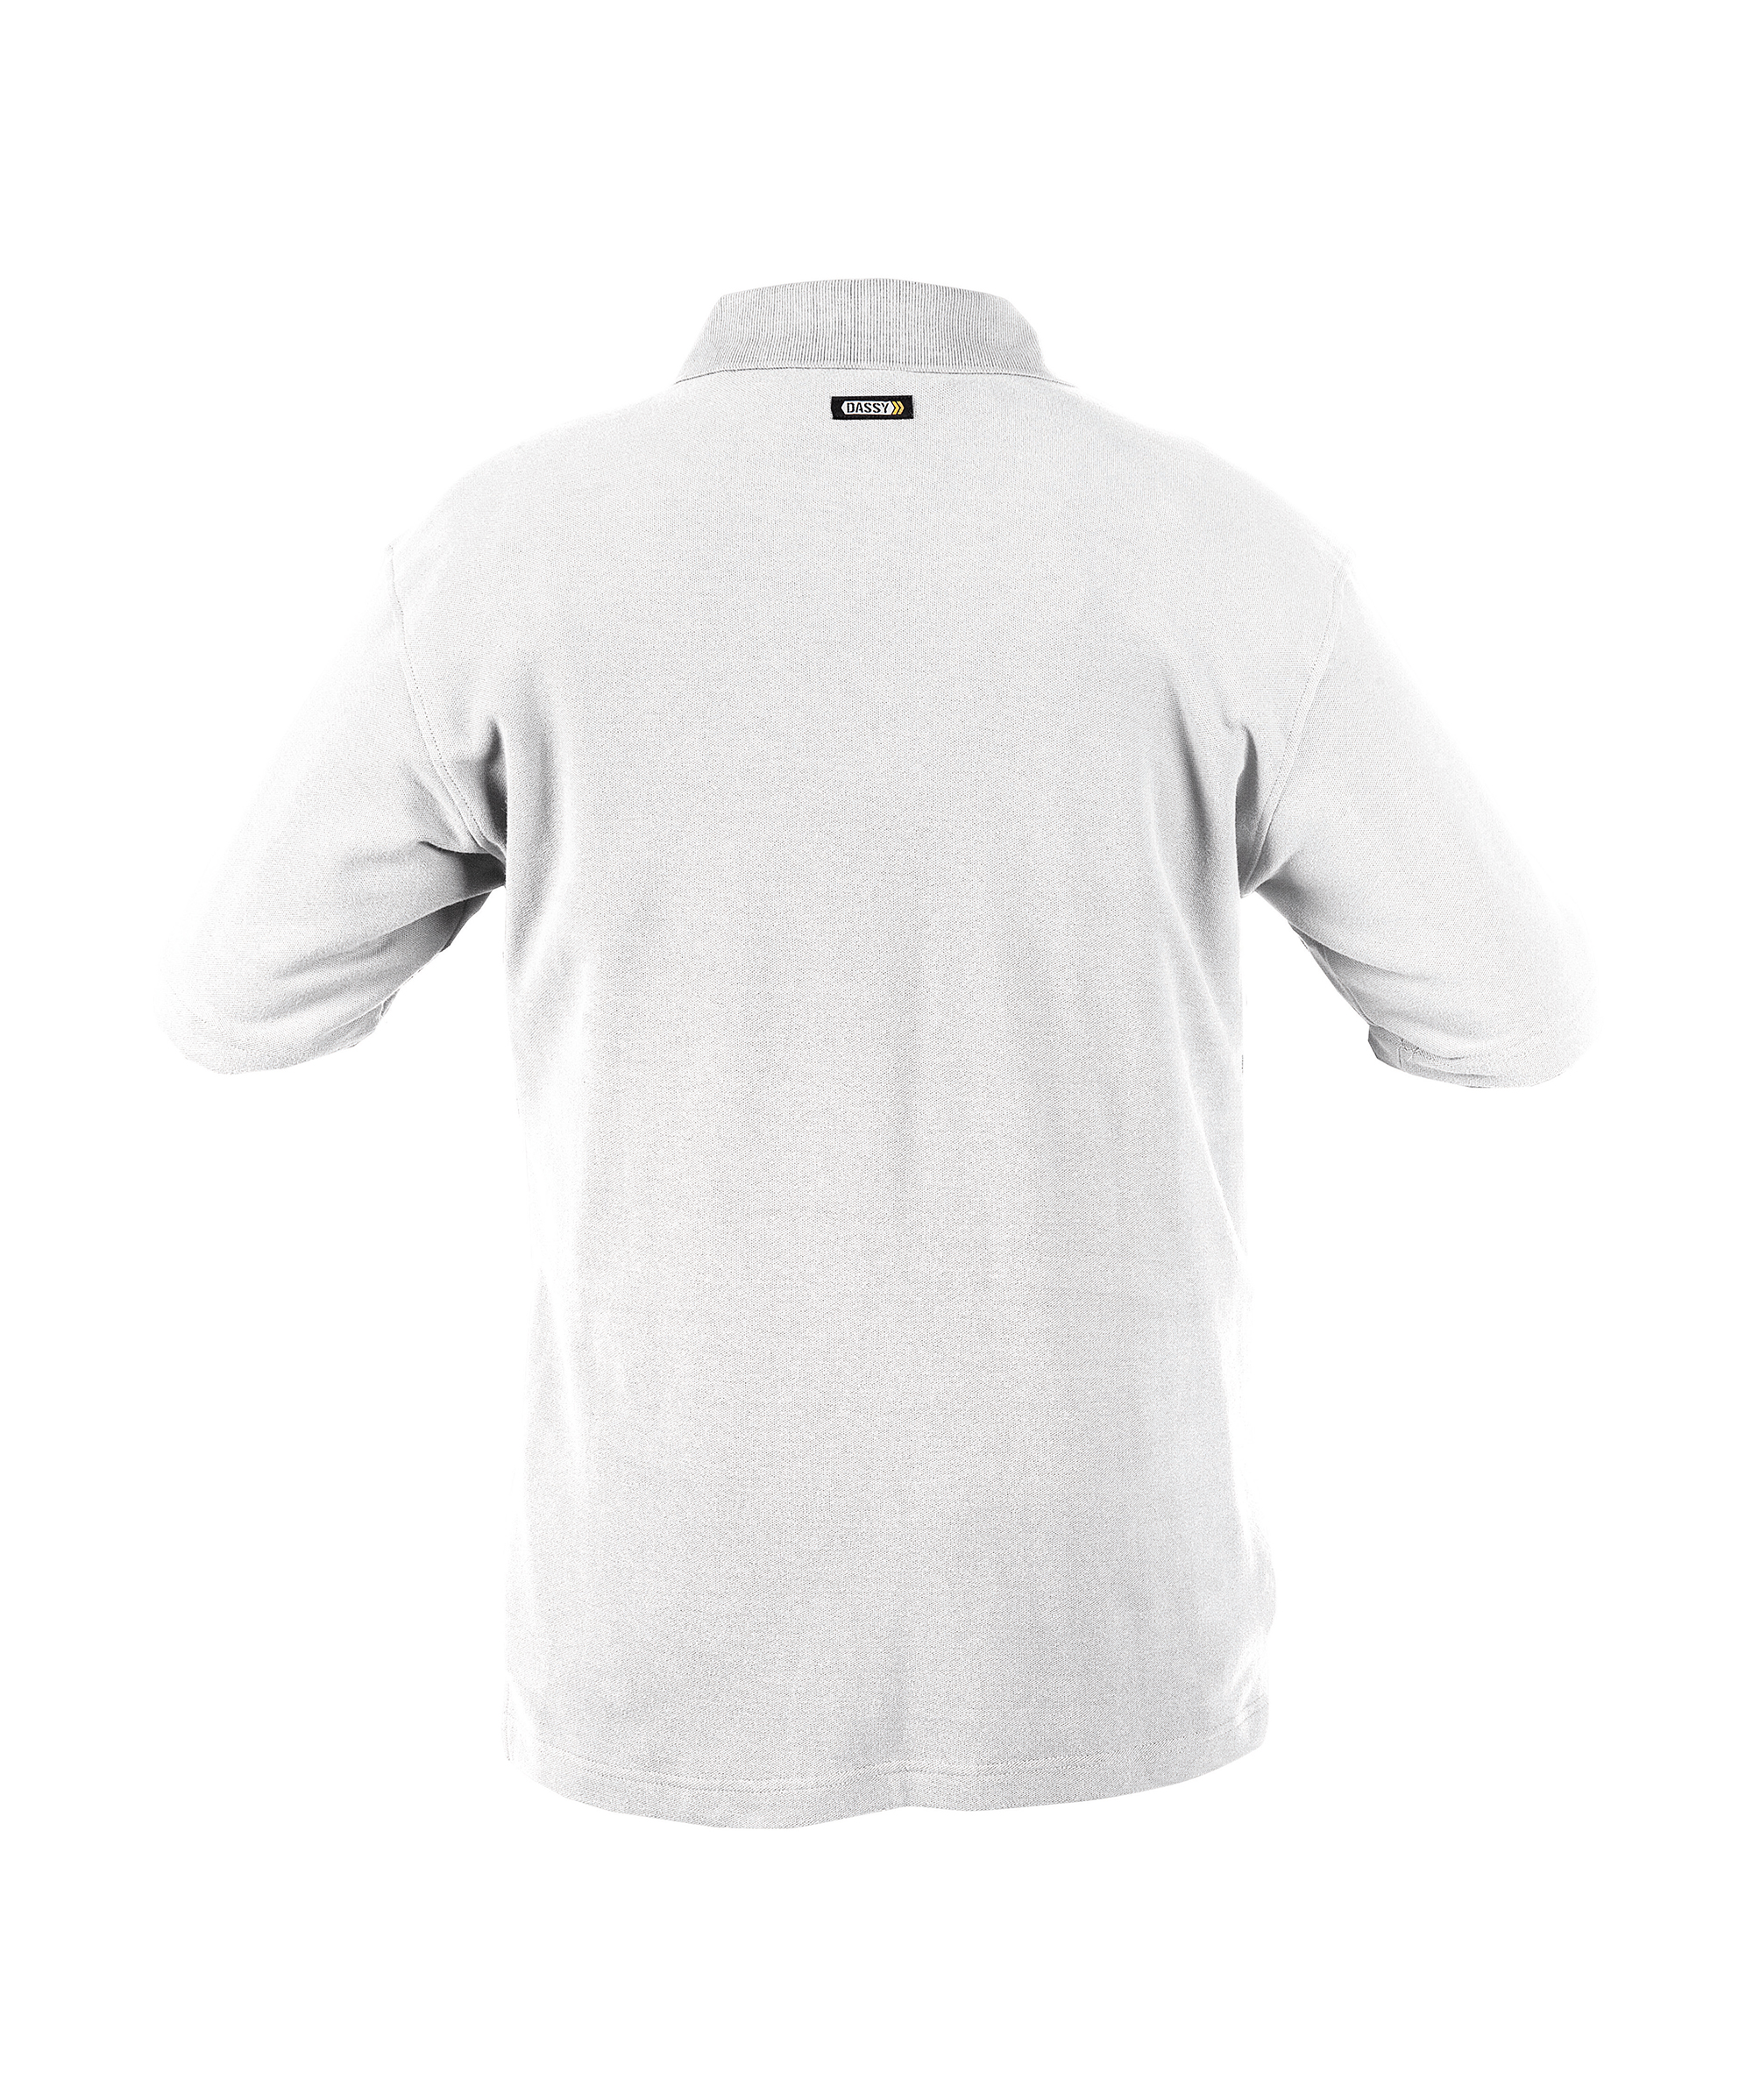 leon_polo-shirt_white_back.jpg